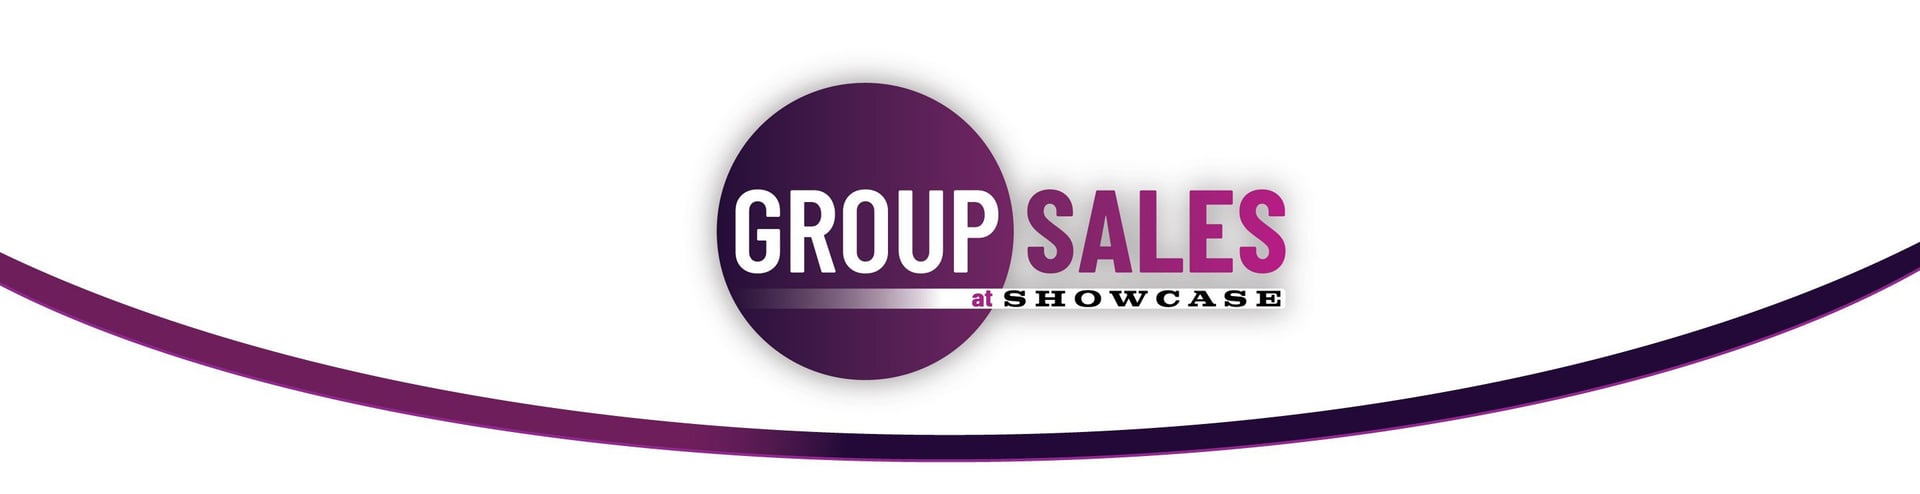 Group sales at Showcase